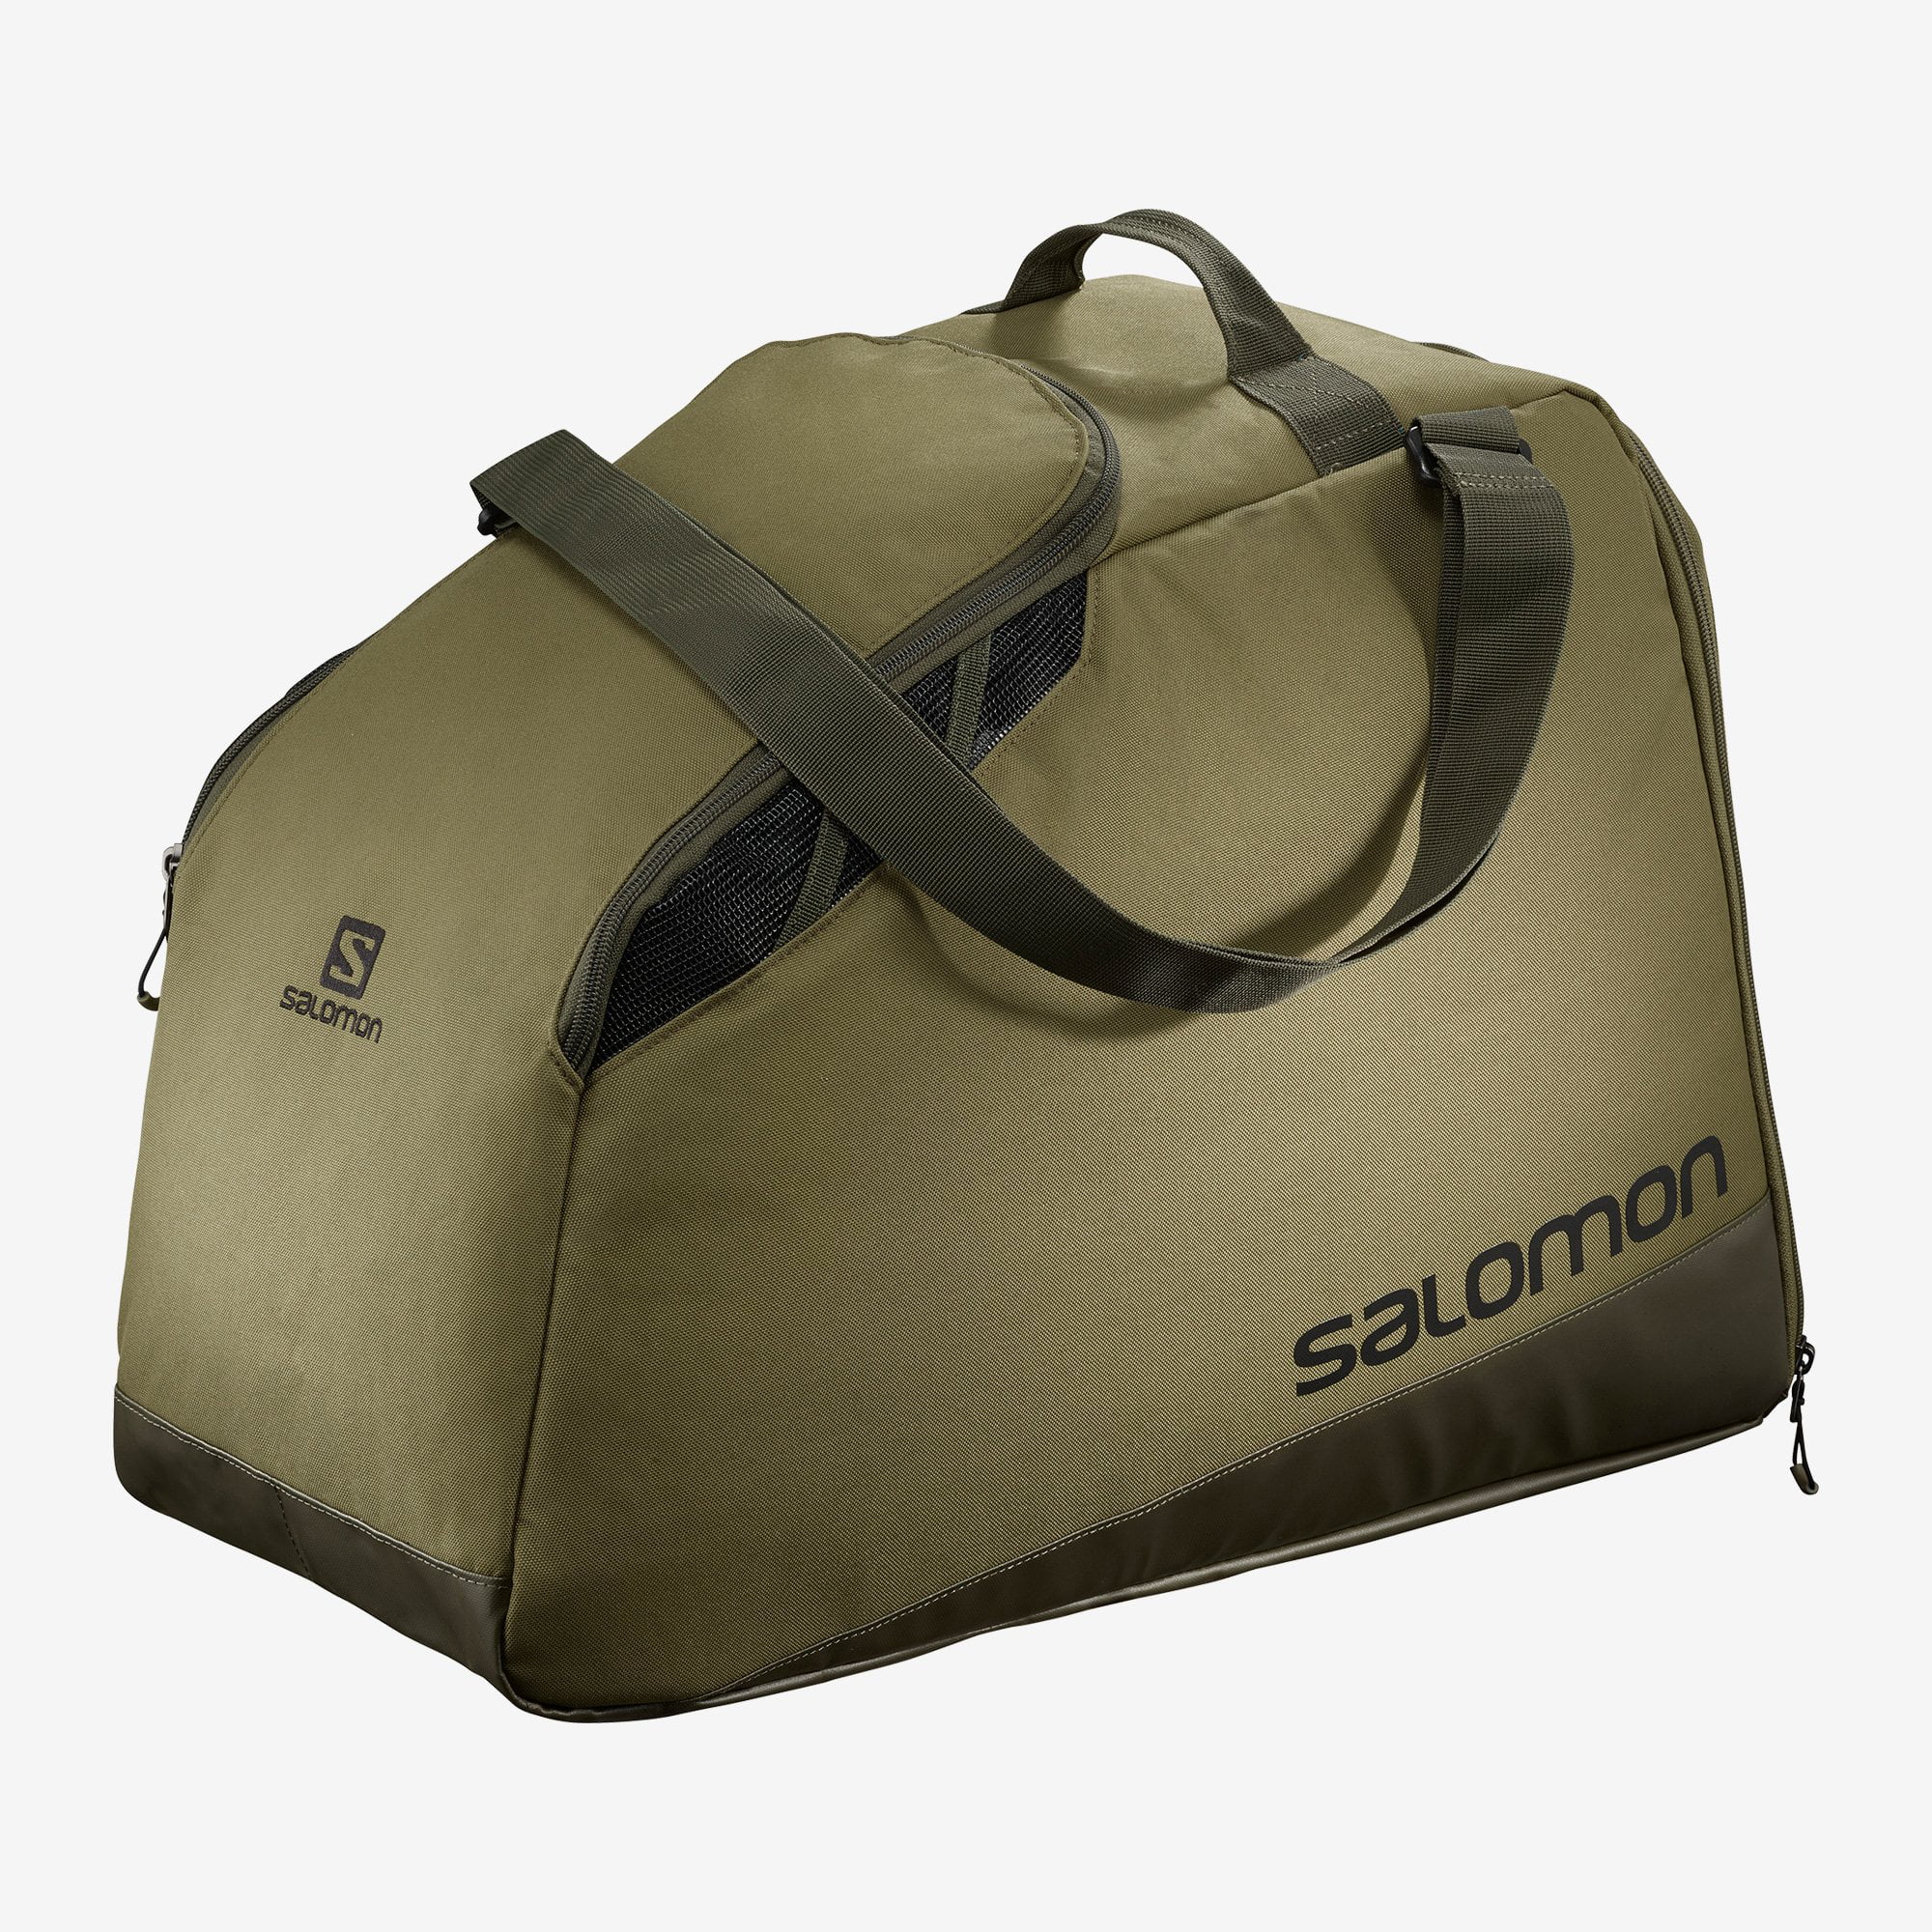 Salomon Extend Max Gearbag Ski Bag - Walmart.com